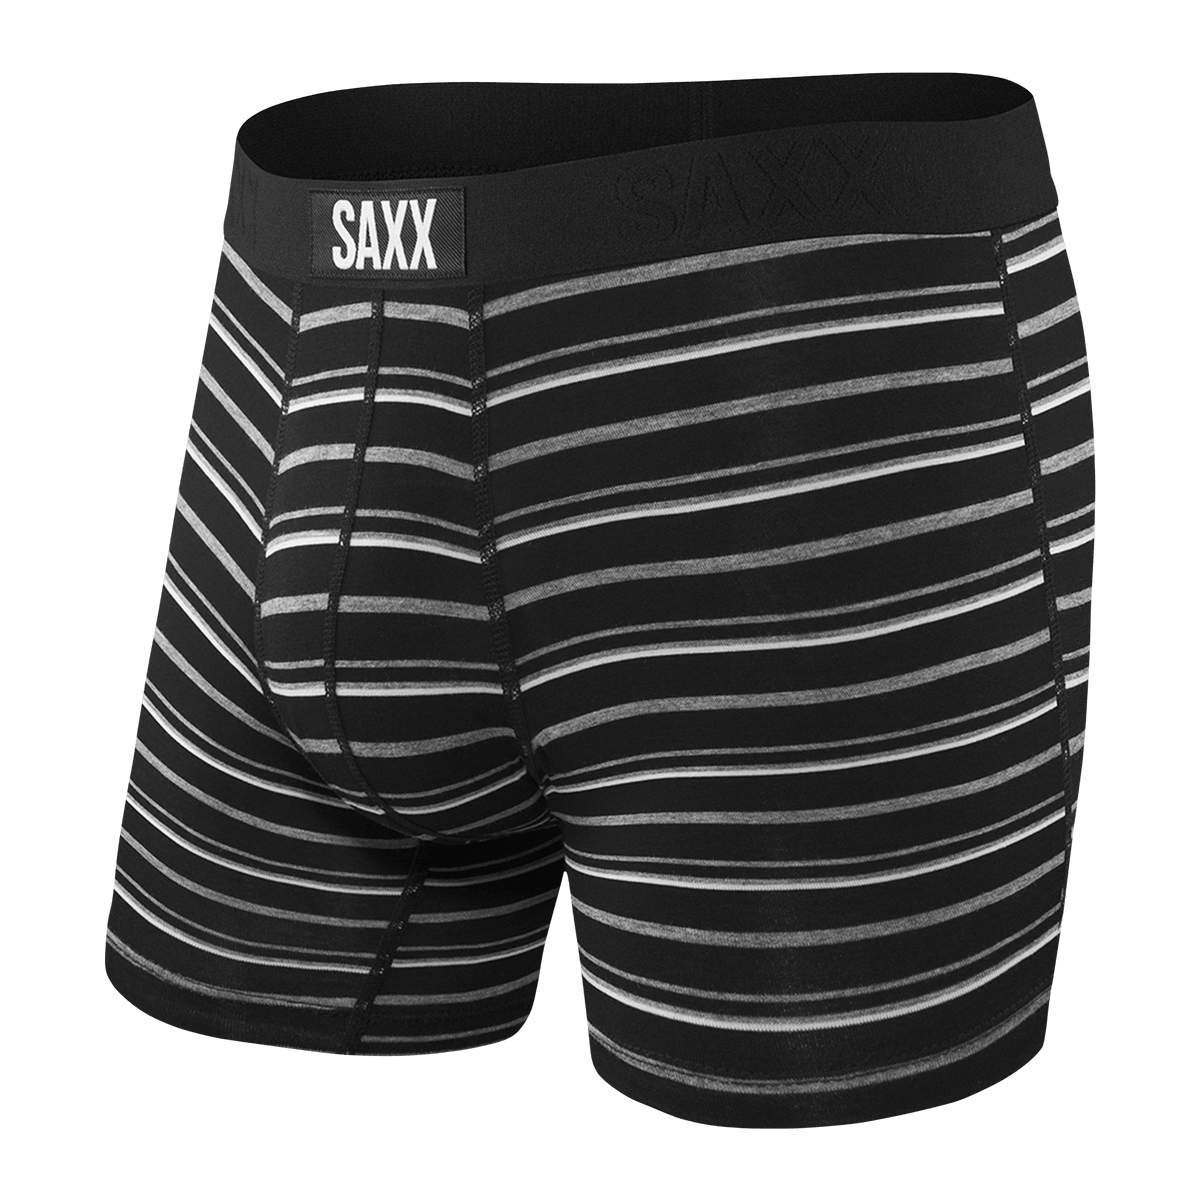 Saxx Vibe Super Soft Boxer Briefs - Men's